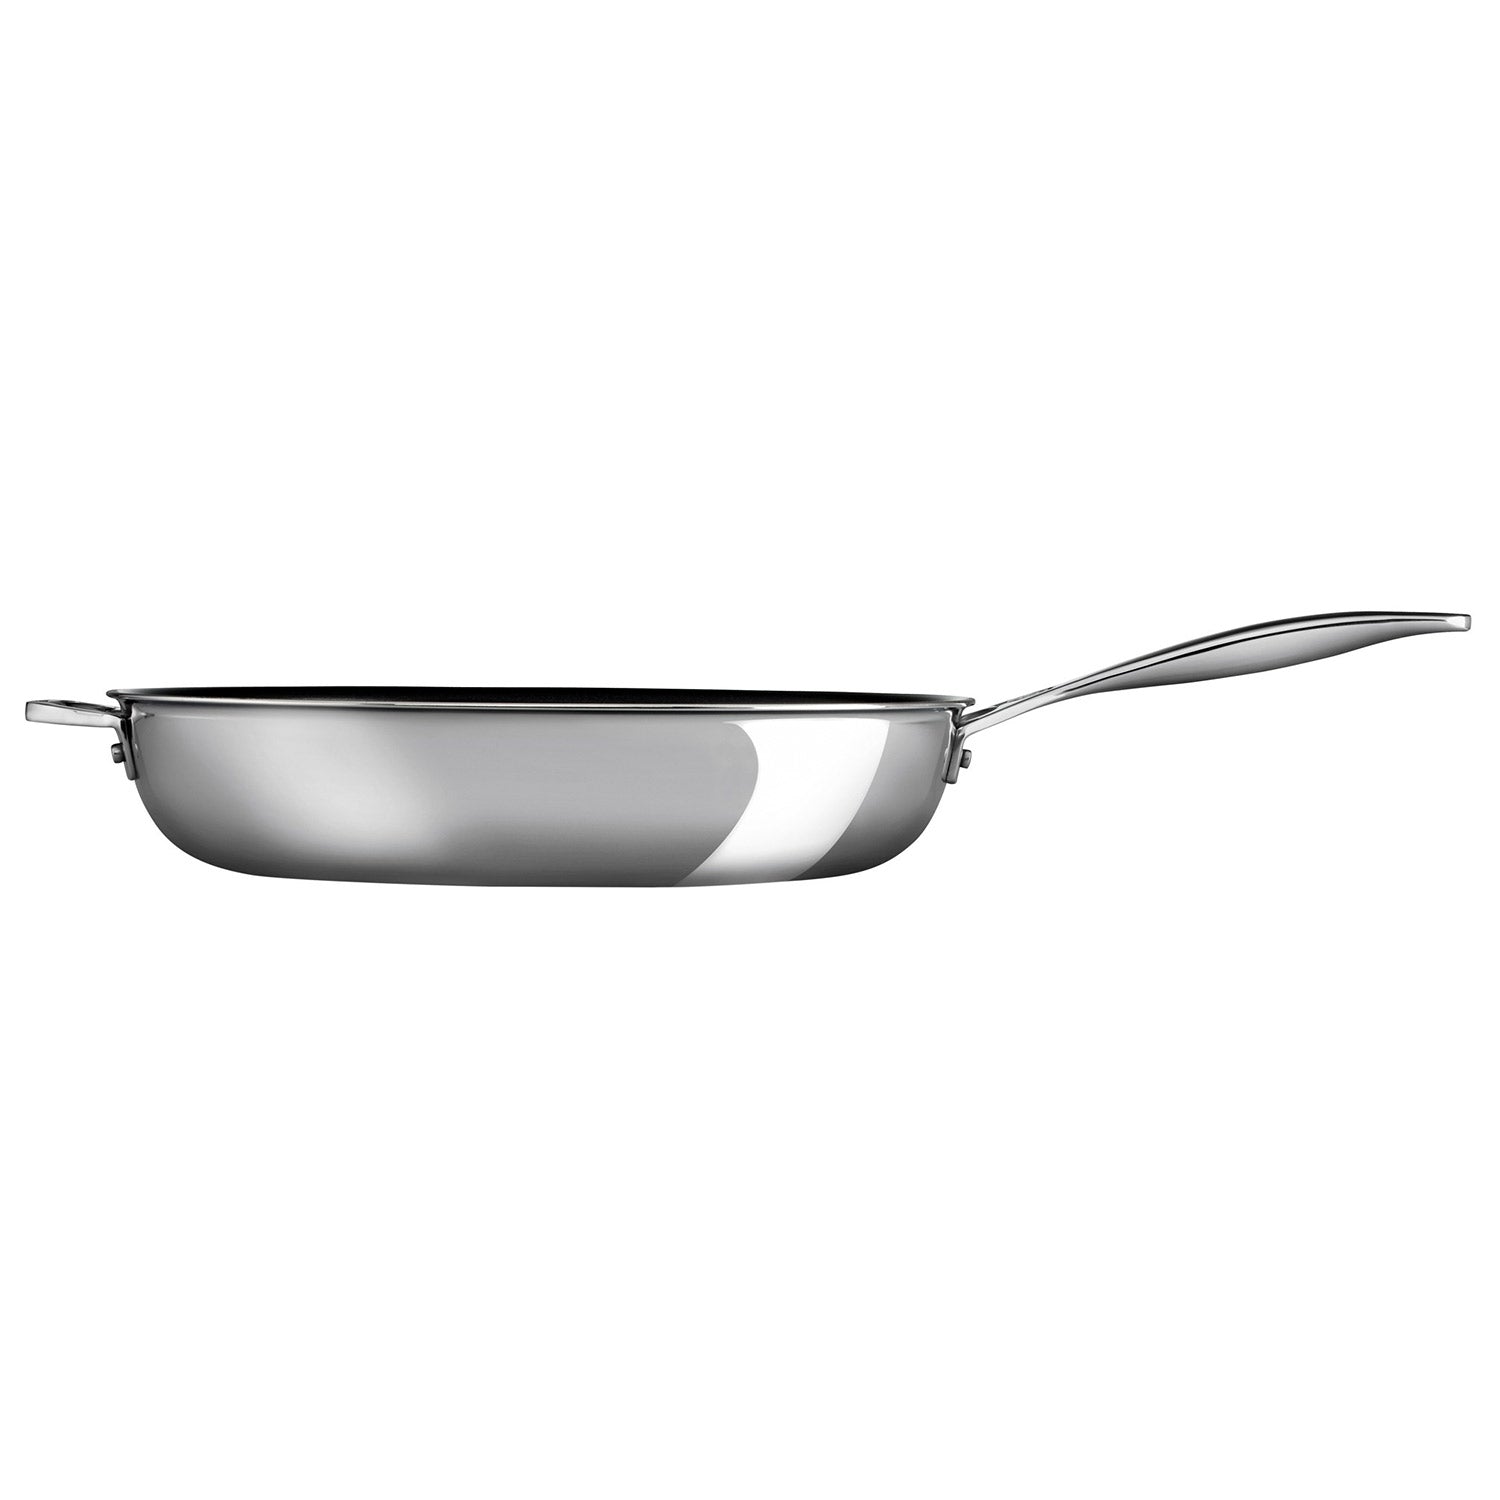 Le Creuset 12.5 Nonstick Deep Fry Pan with Helper Handle - Stainless Steel